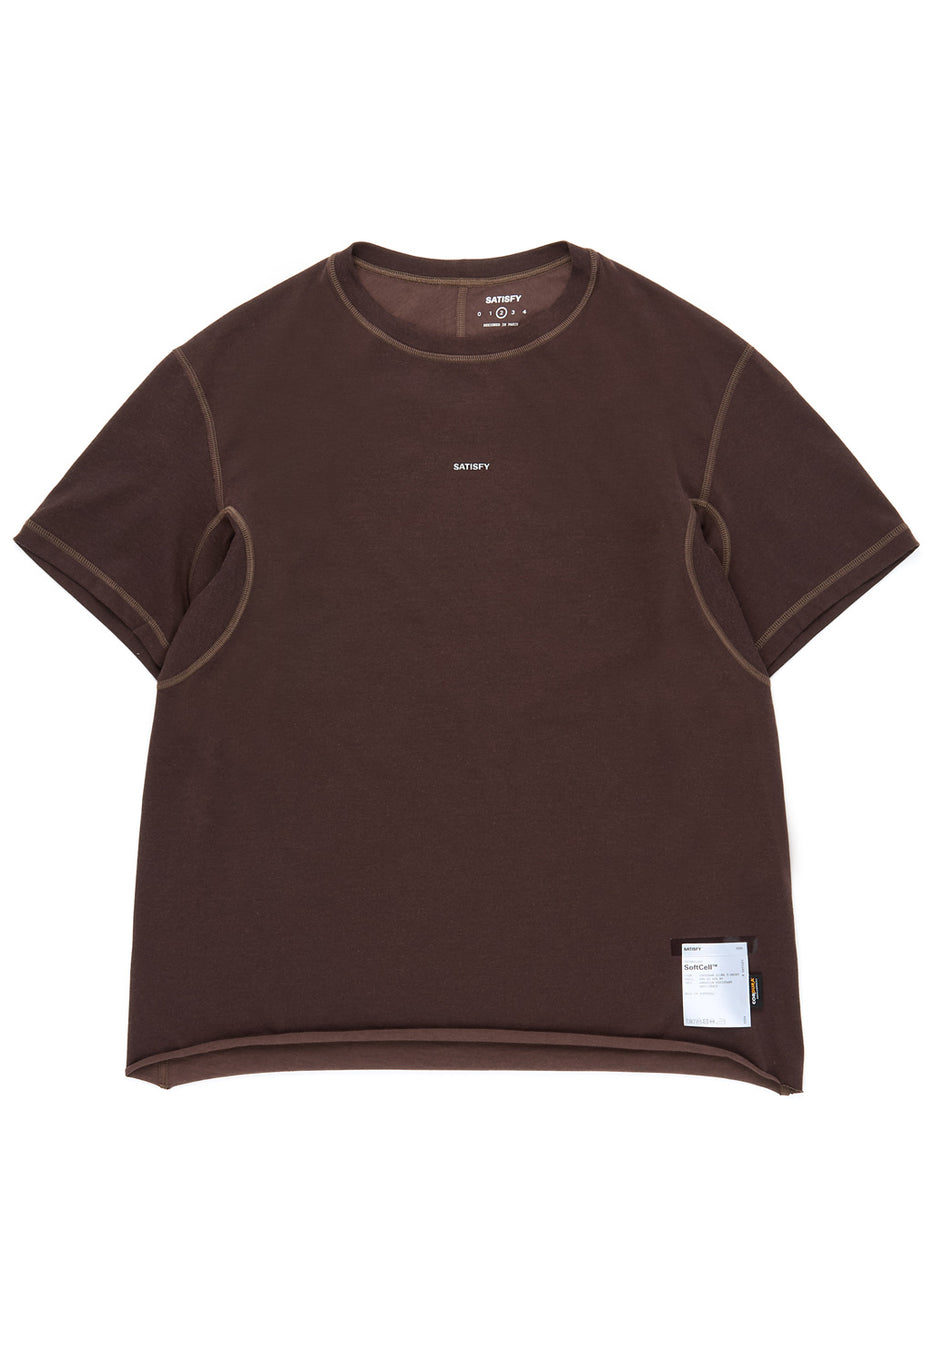 Satisfy Men's Softcell Cordura T-Shirt - Brown